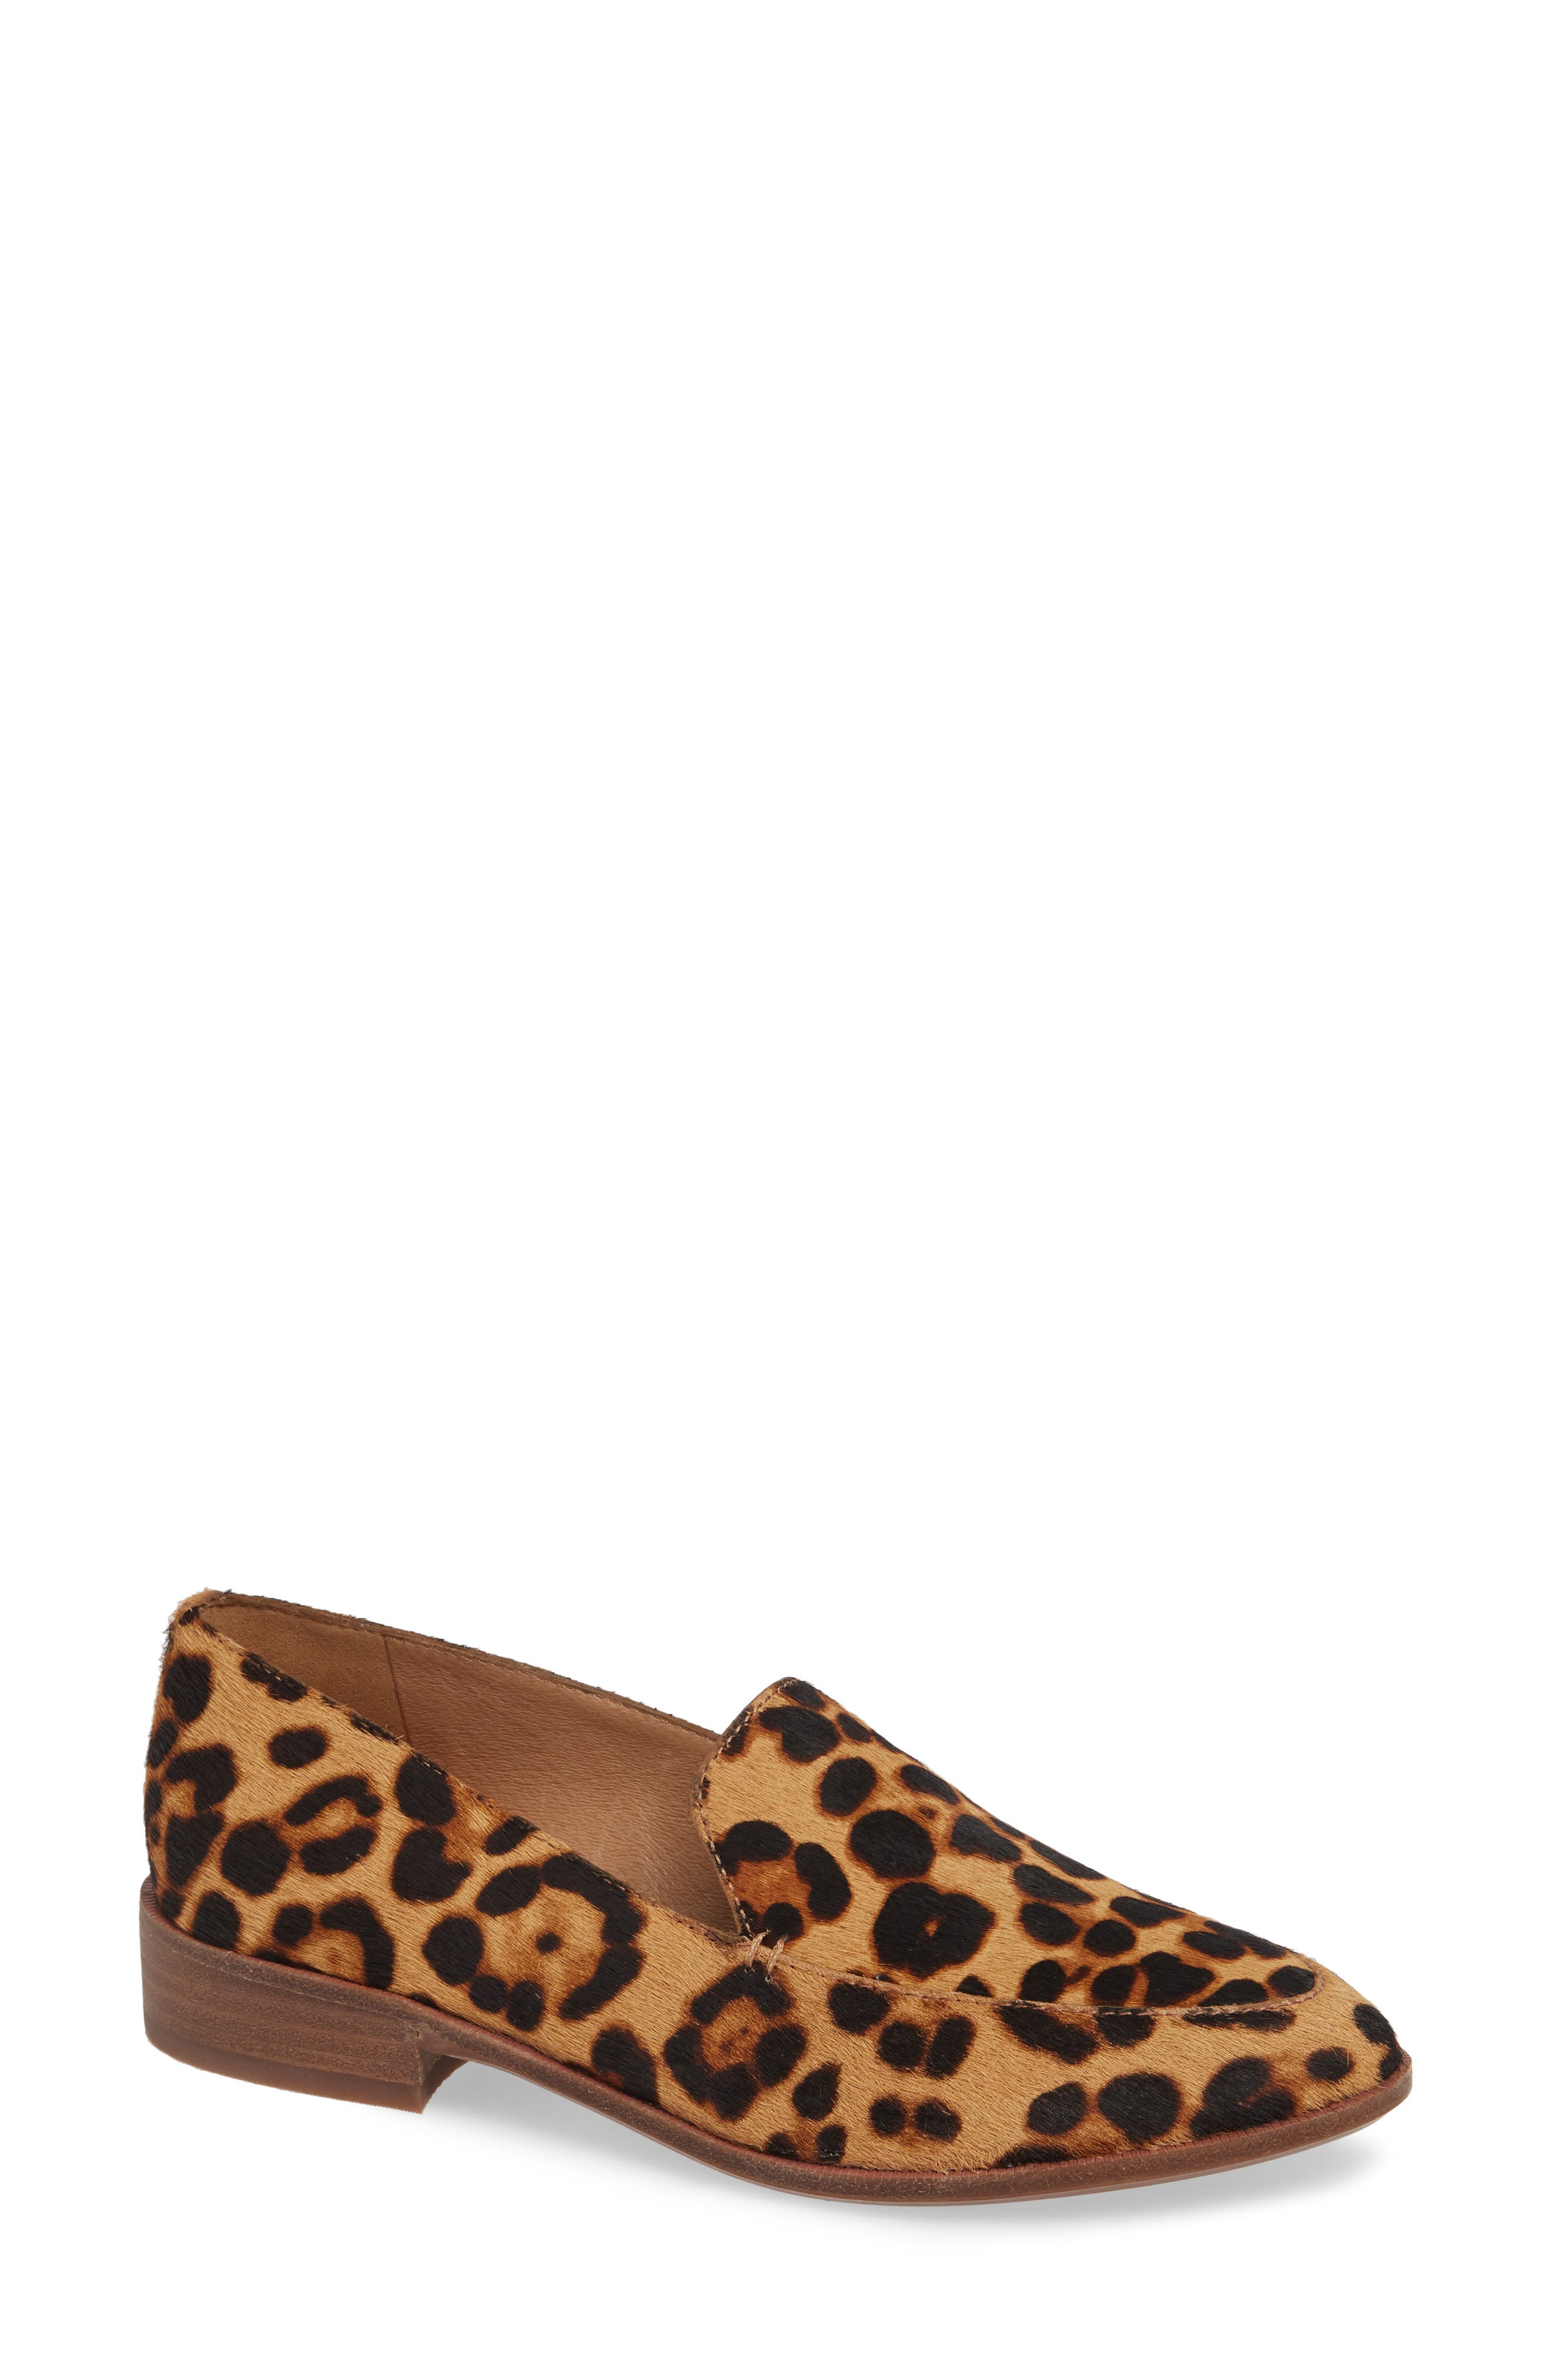 madewell frances loafer leopard